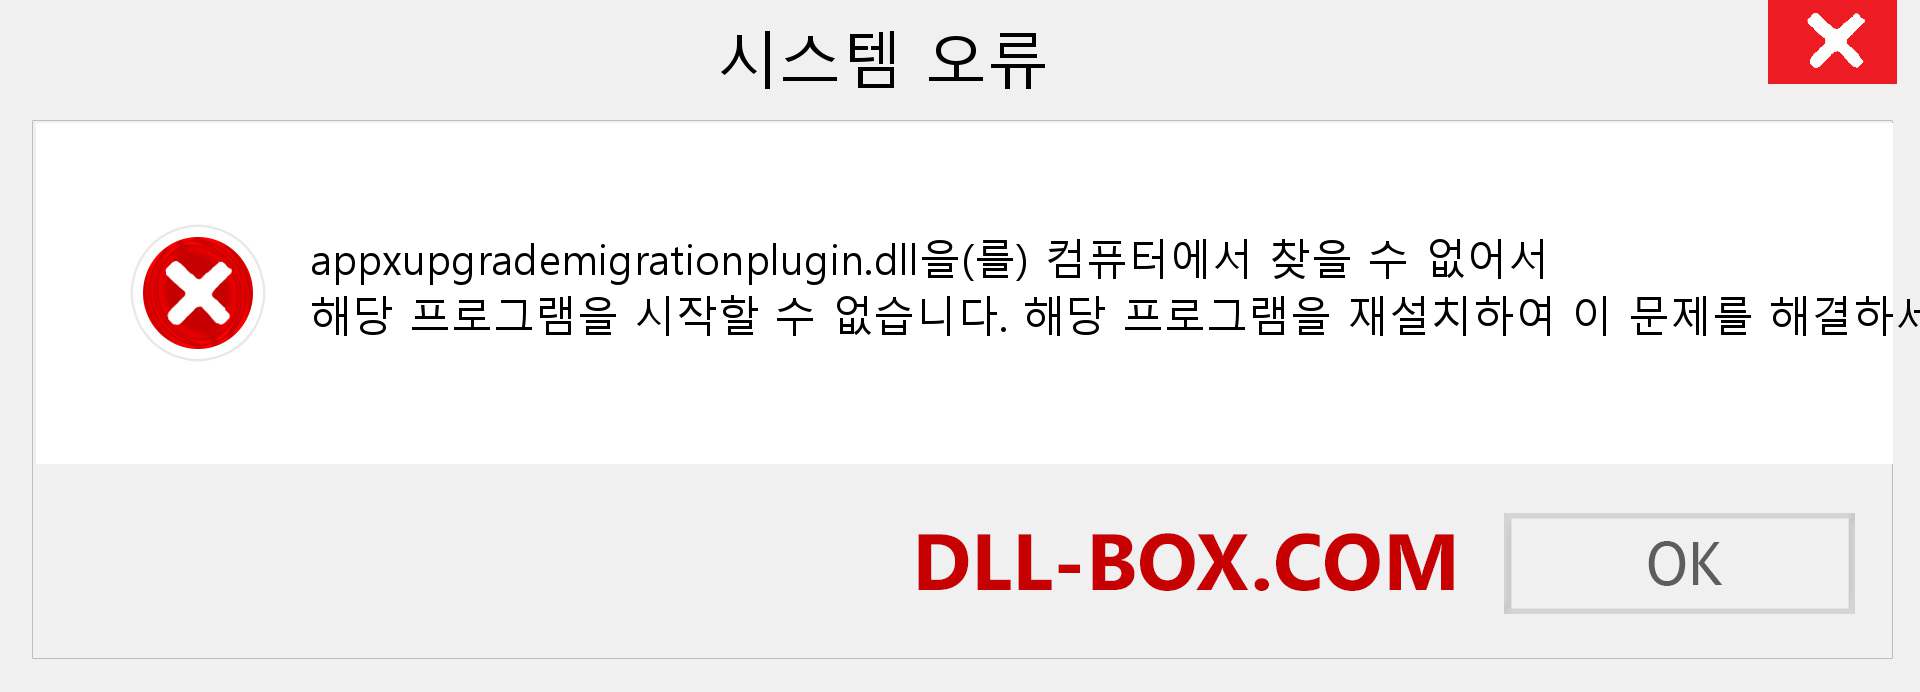 appxupgrademigrationplugin.dll 파일이 누락 되었습니까?. Windows 7, 8, 10용 다운로드 - Windows, 사진, 이미지에서 appxupgrademigrationplugin dll 누락 오류 수정